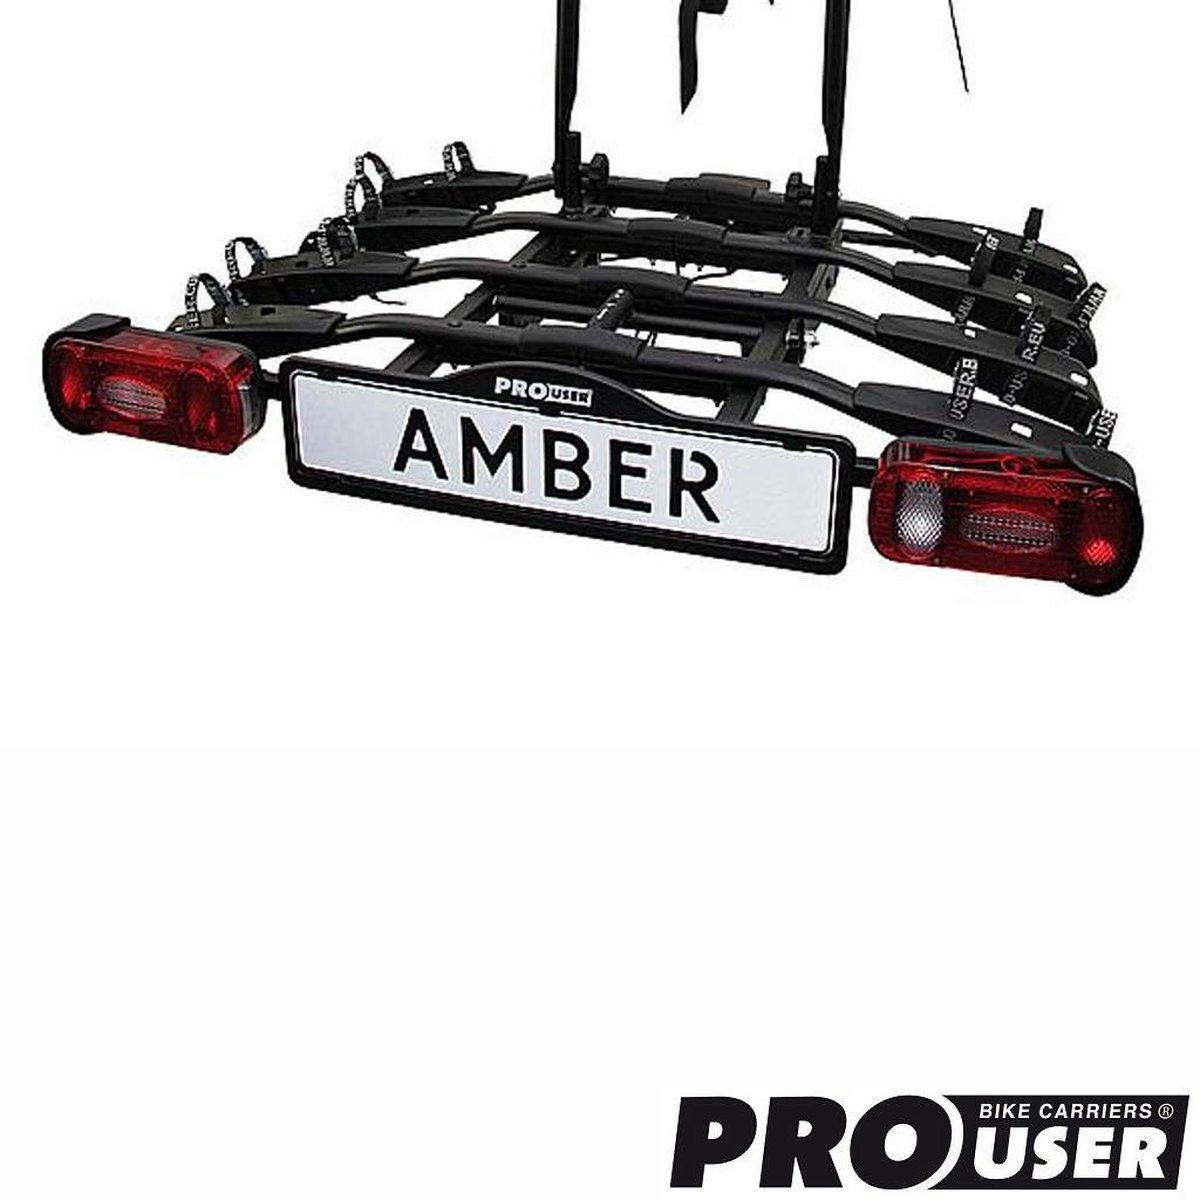 Pro-user Fietsendrager - Amber - 4 Fietsen | bol.com